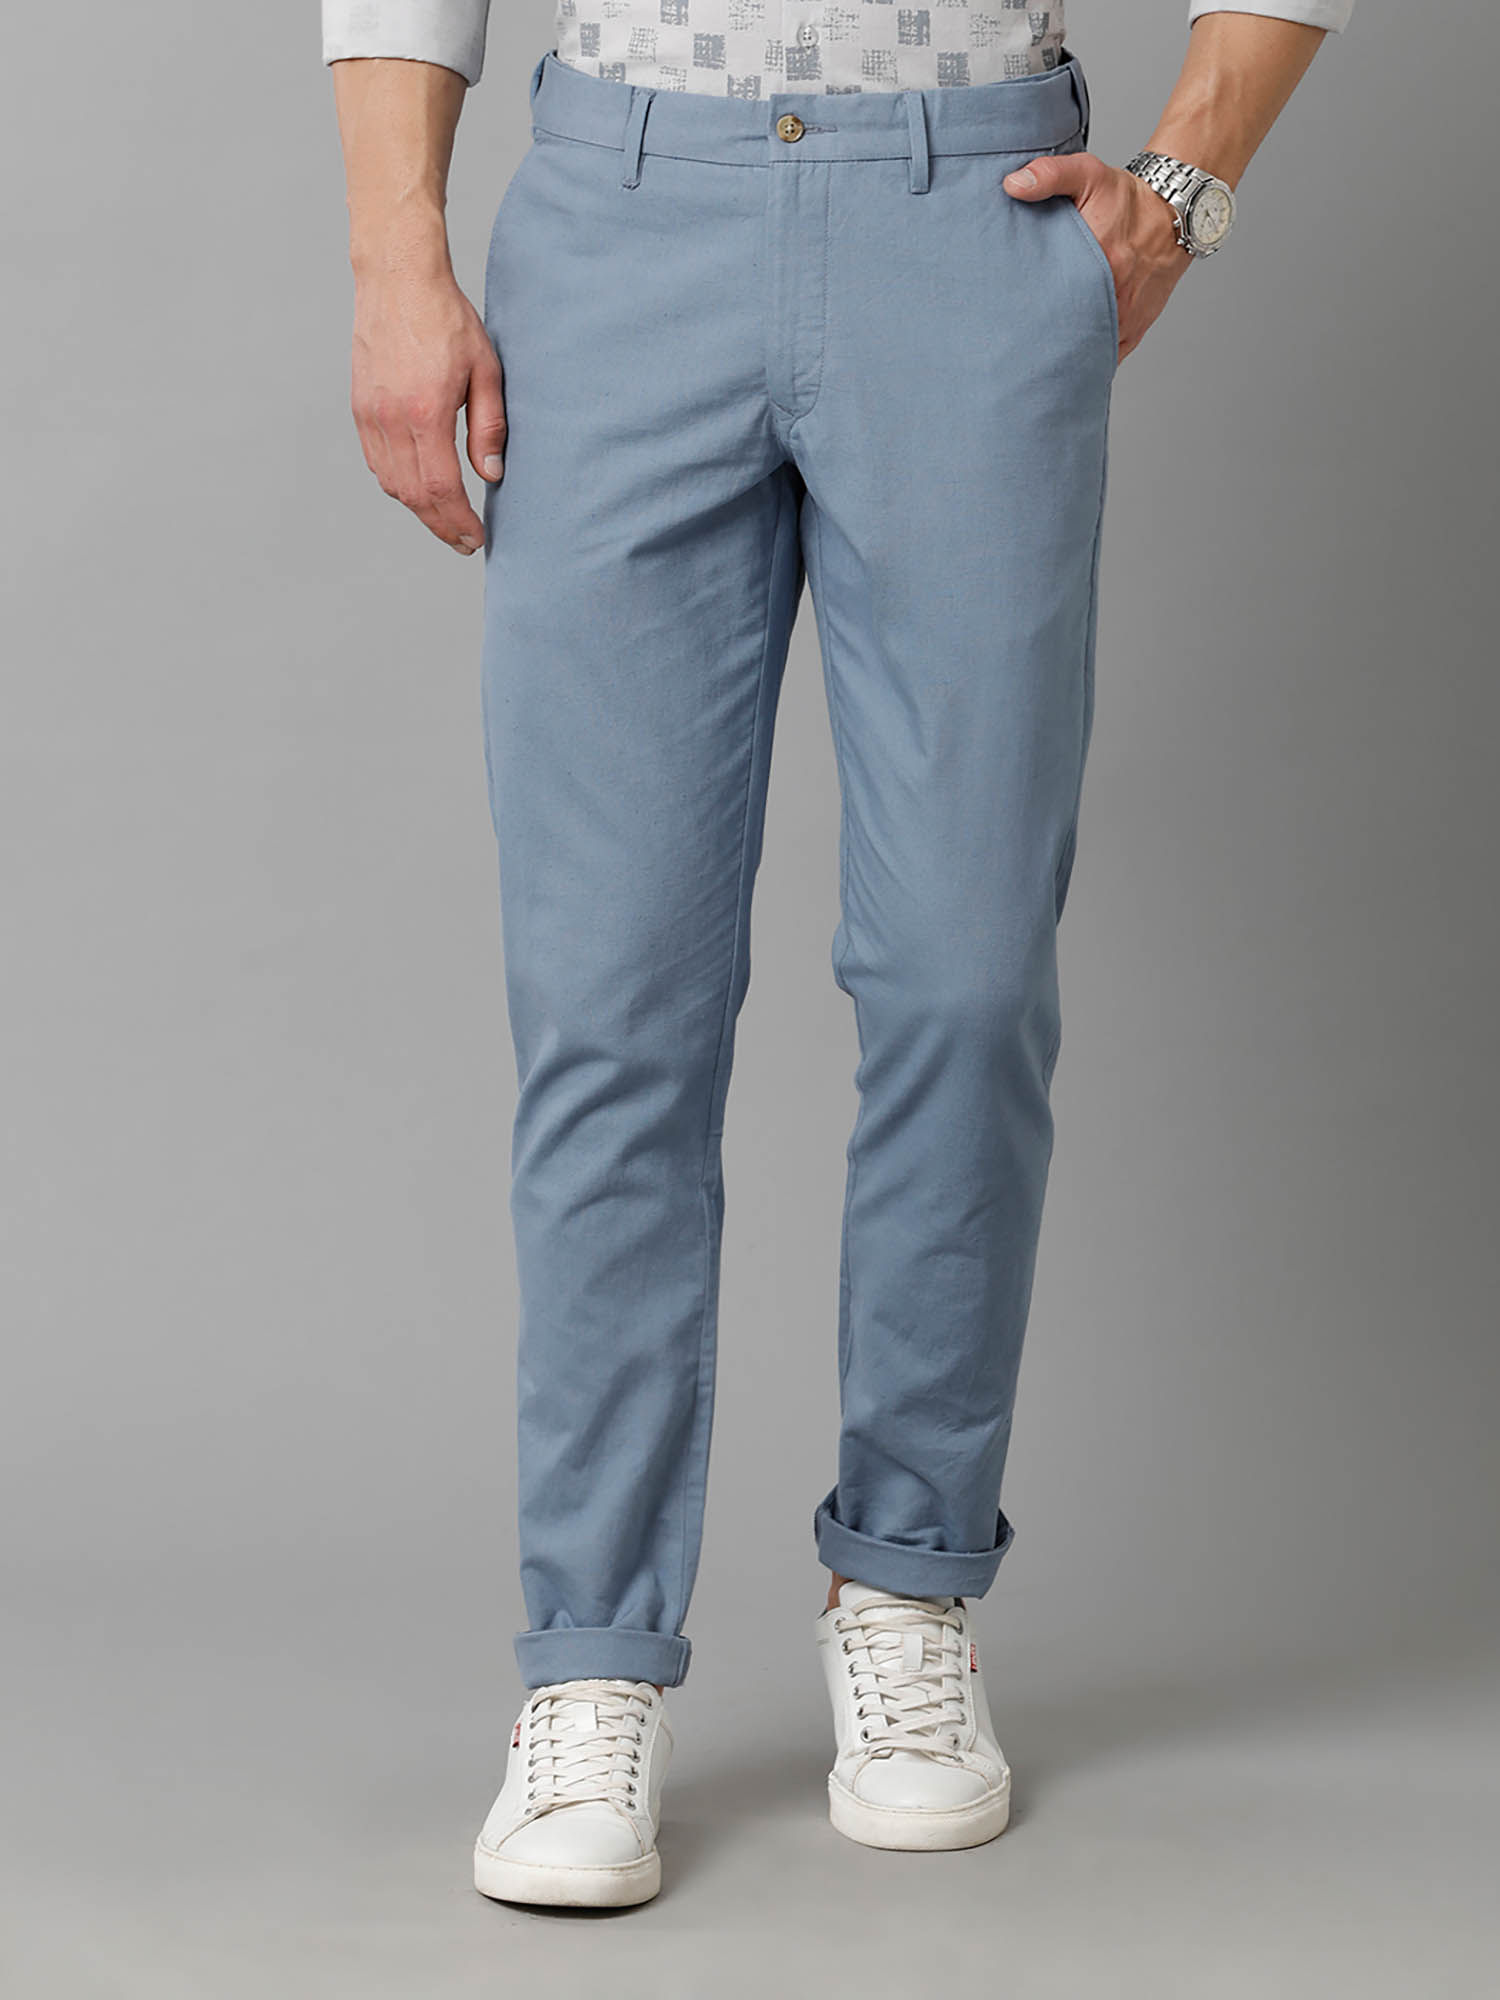 Slim Fit Pants - Light gray/checked - Men | H&M US